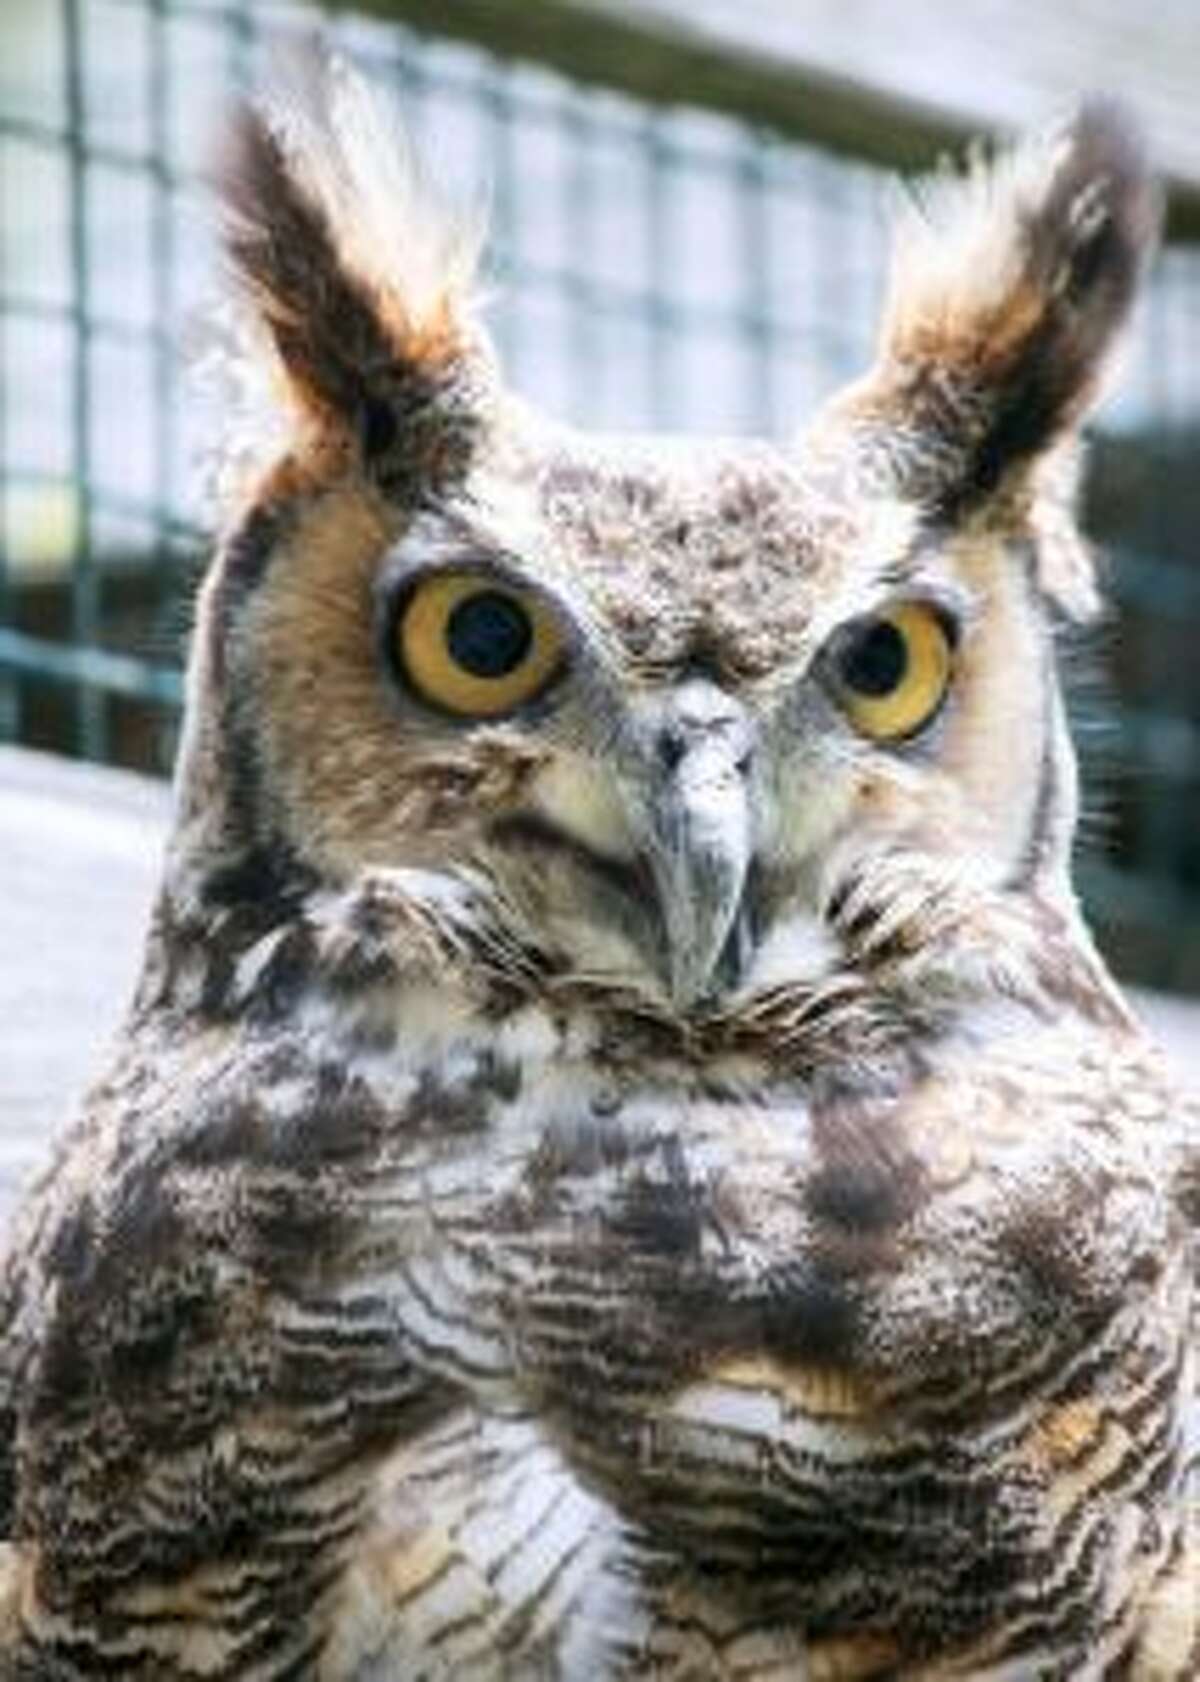 Woodcock Nature Center's resident Great Horned Owl, Hooty